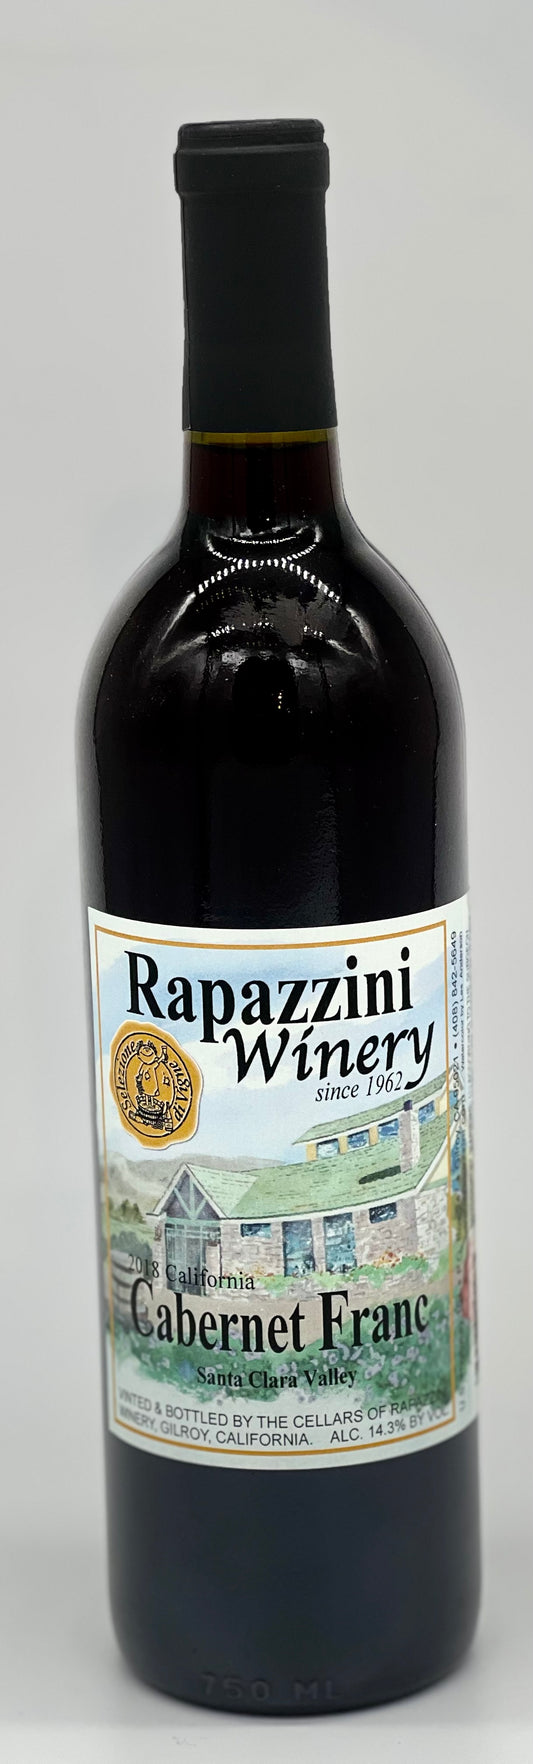 Cabernet Franc 2018 Santa Clara Valley California Rapazzini.Wine 750 ml 25 oz14.3%alcohol $34